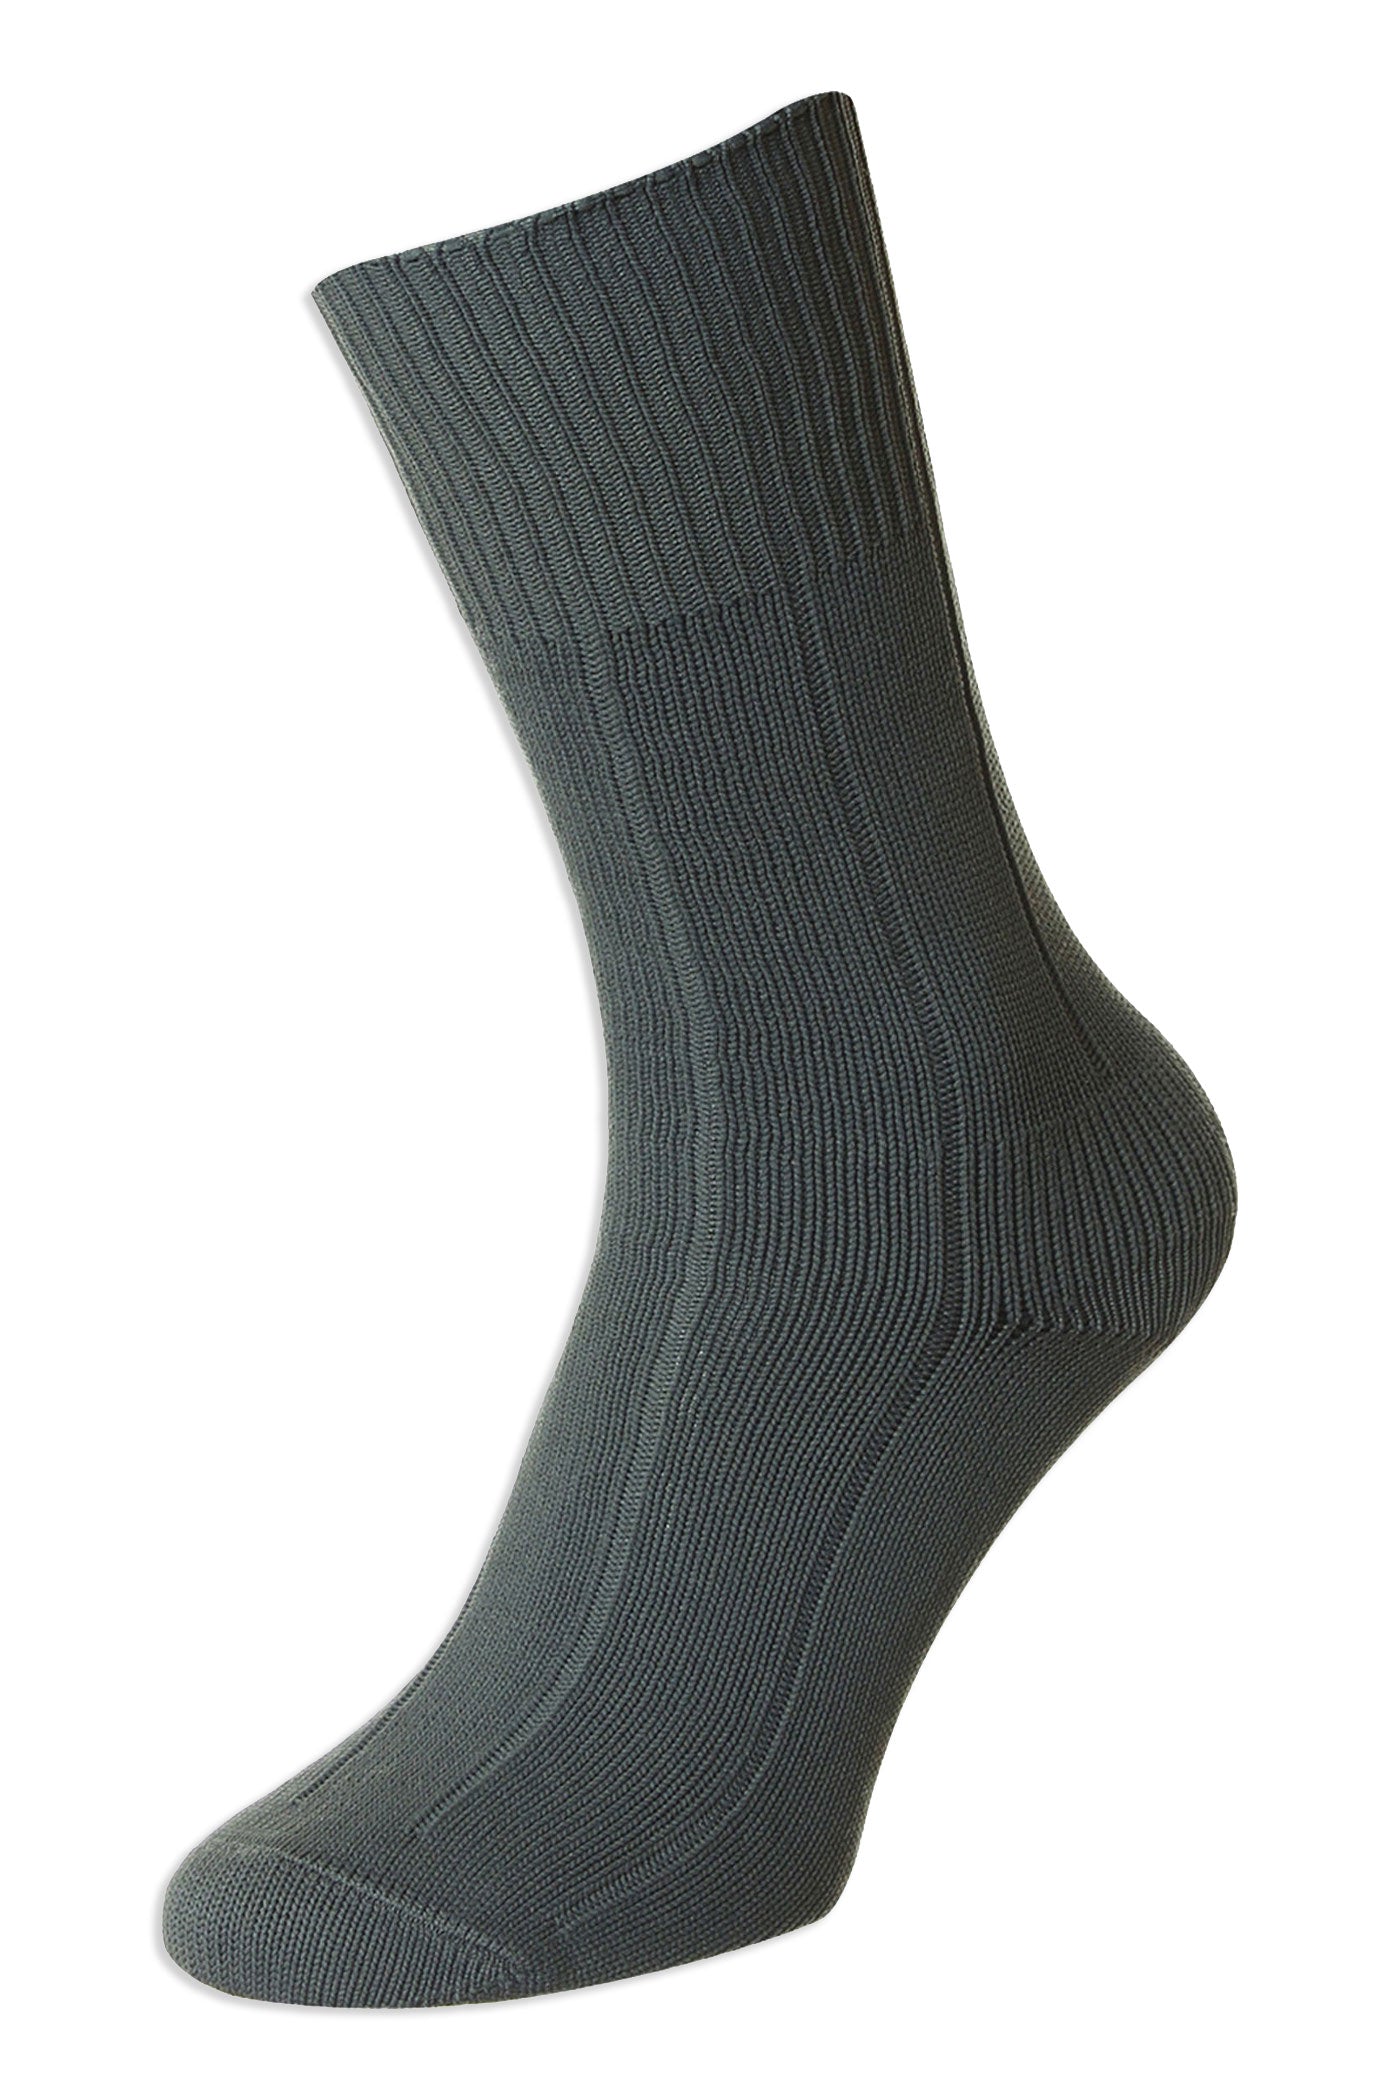 grey work sock HJ Hall Ribbed Pattern Indestructible Sock 